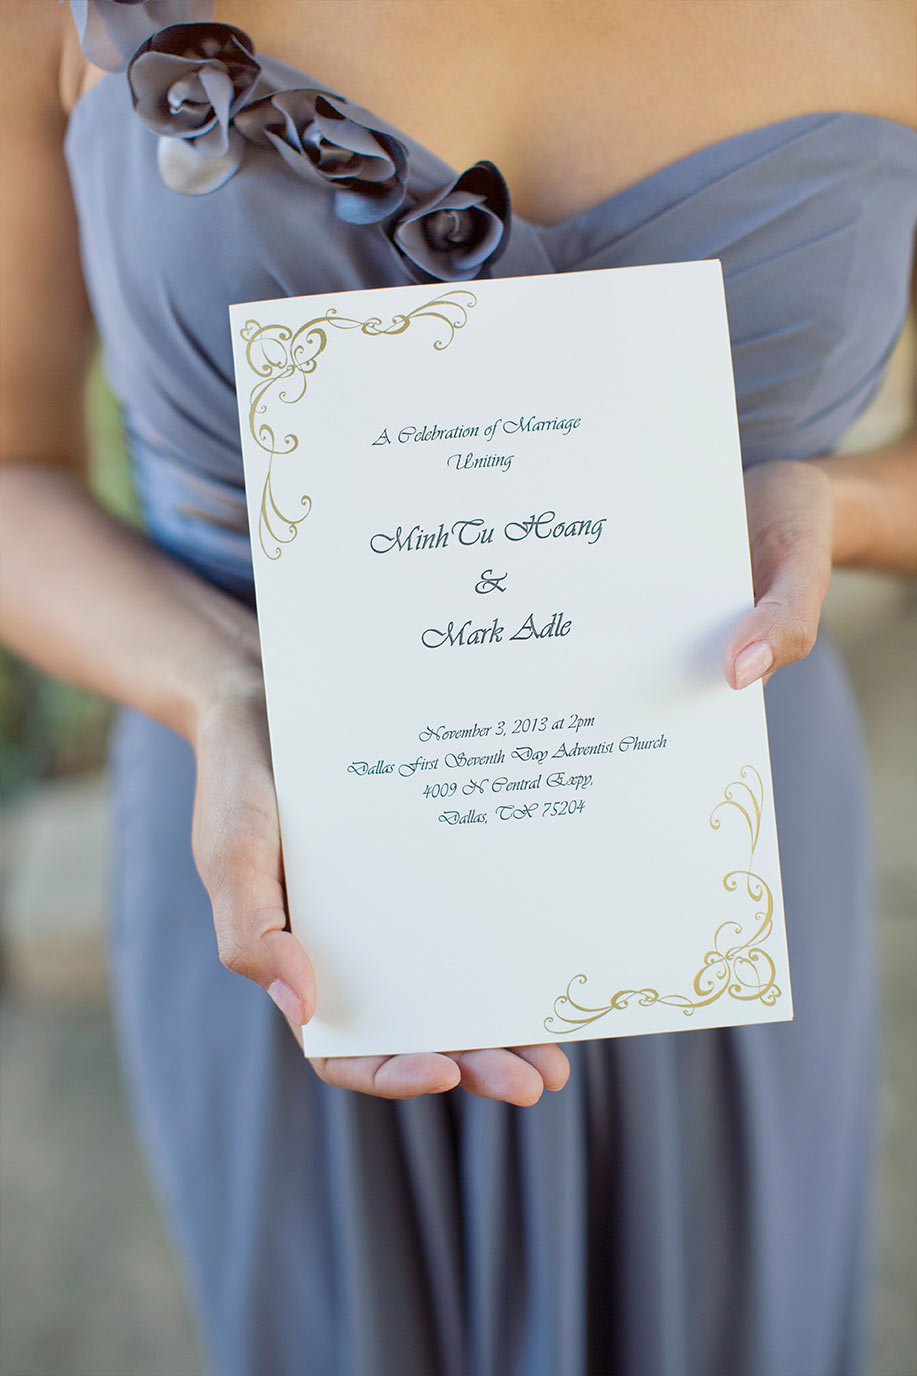 Bridesmaid holding a wedding invitation